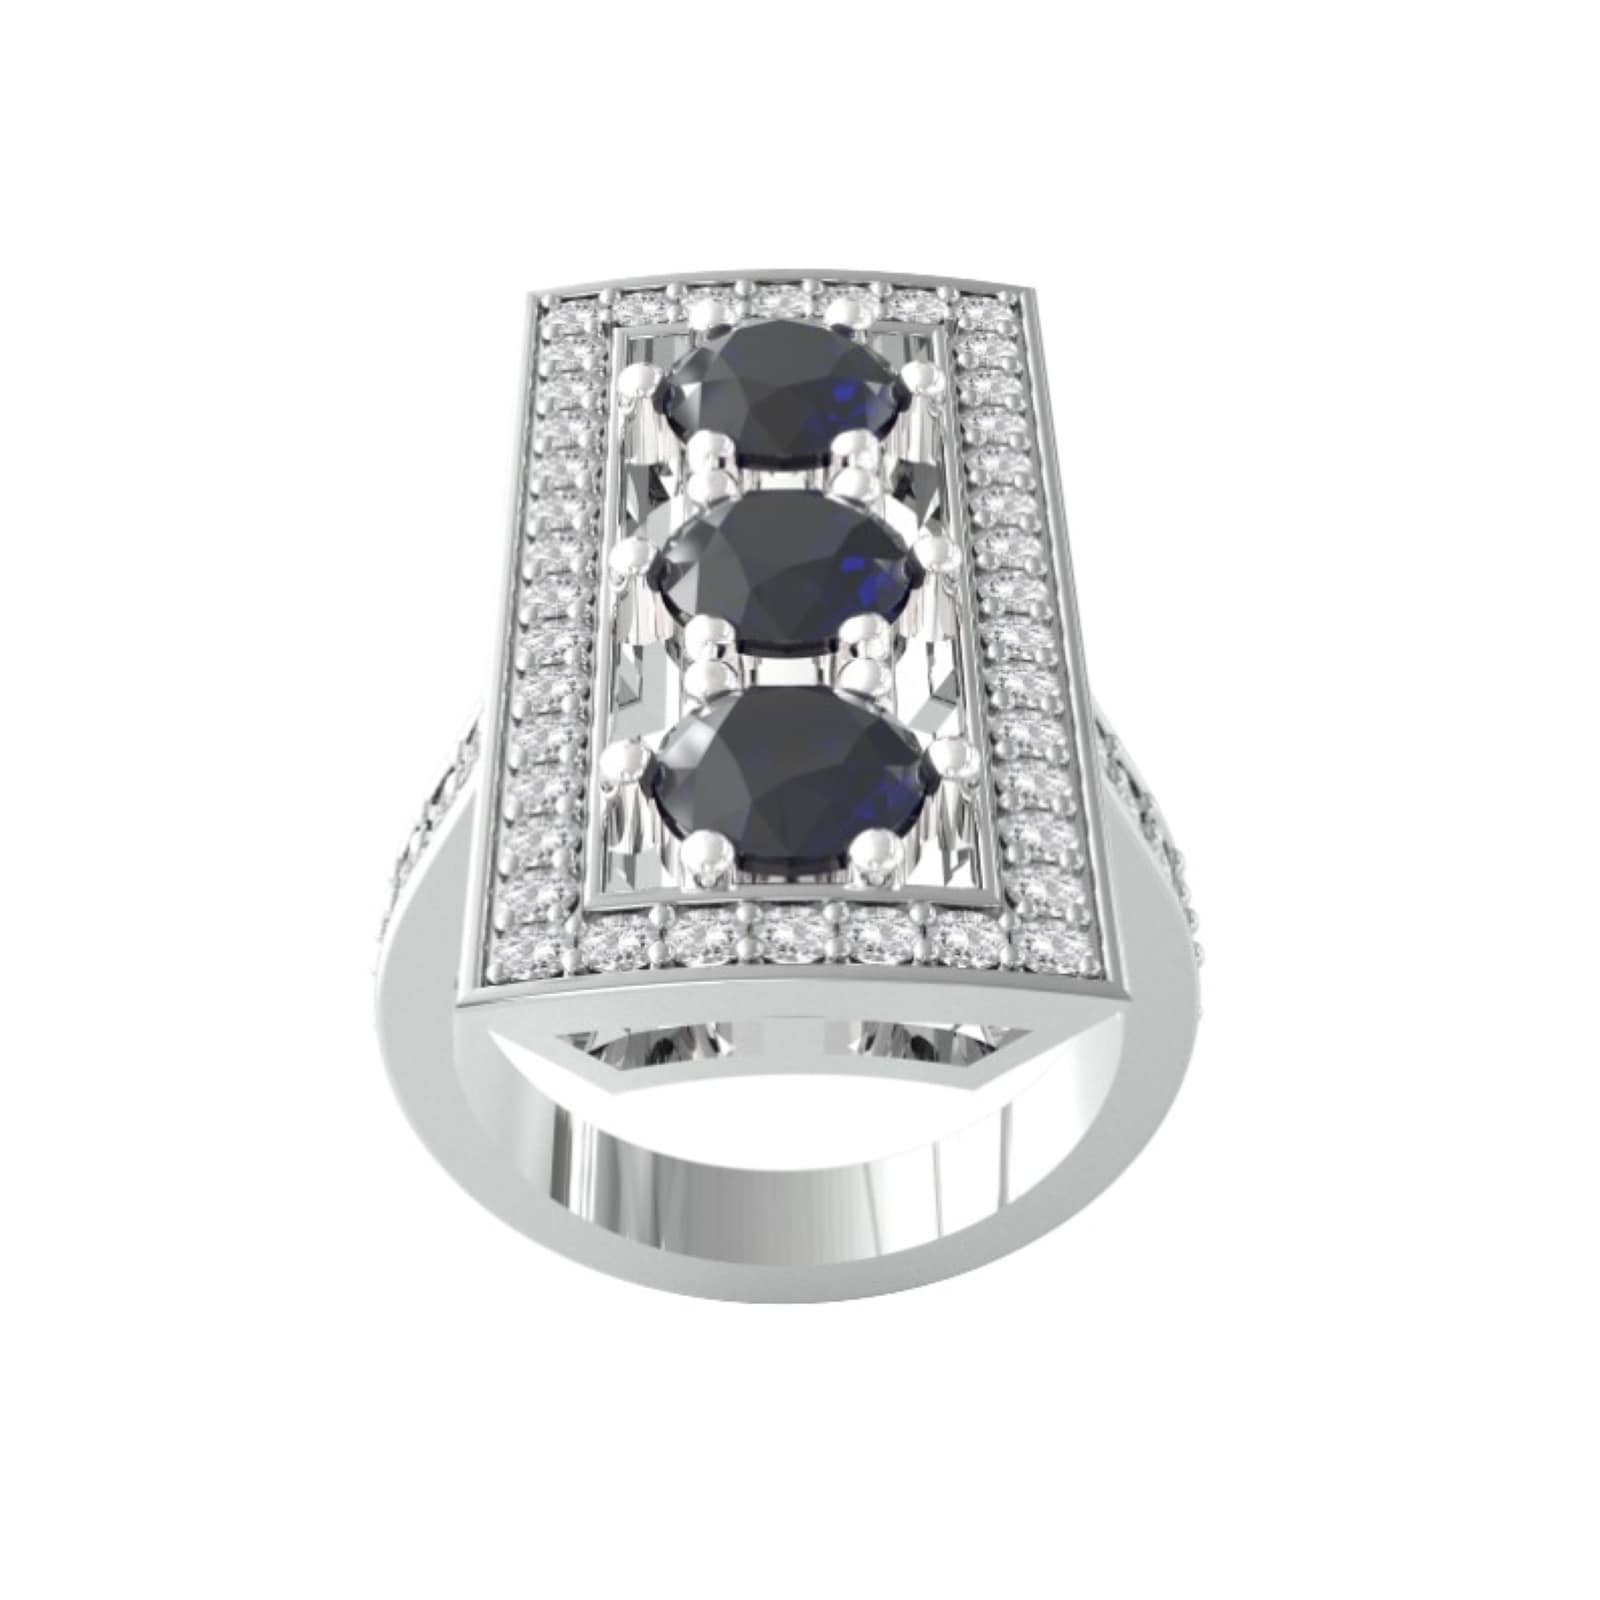 18ct White Gold Art Deco Sapphire & Diamond Plaque Ring - Ring Size R.5